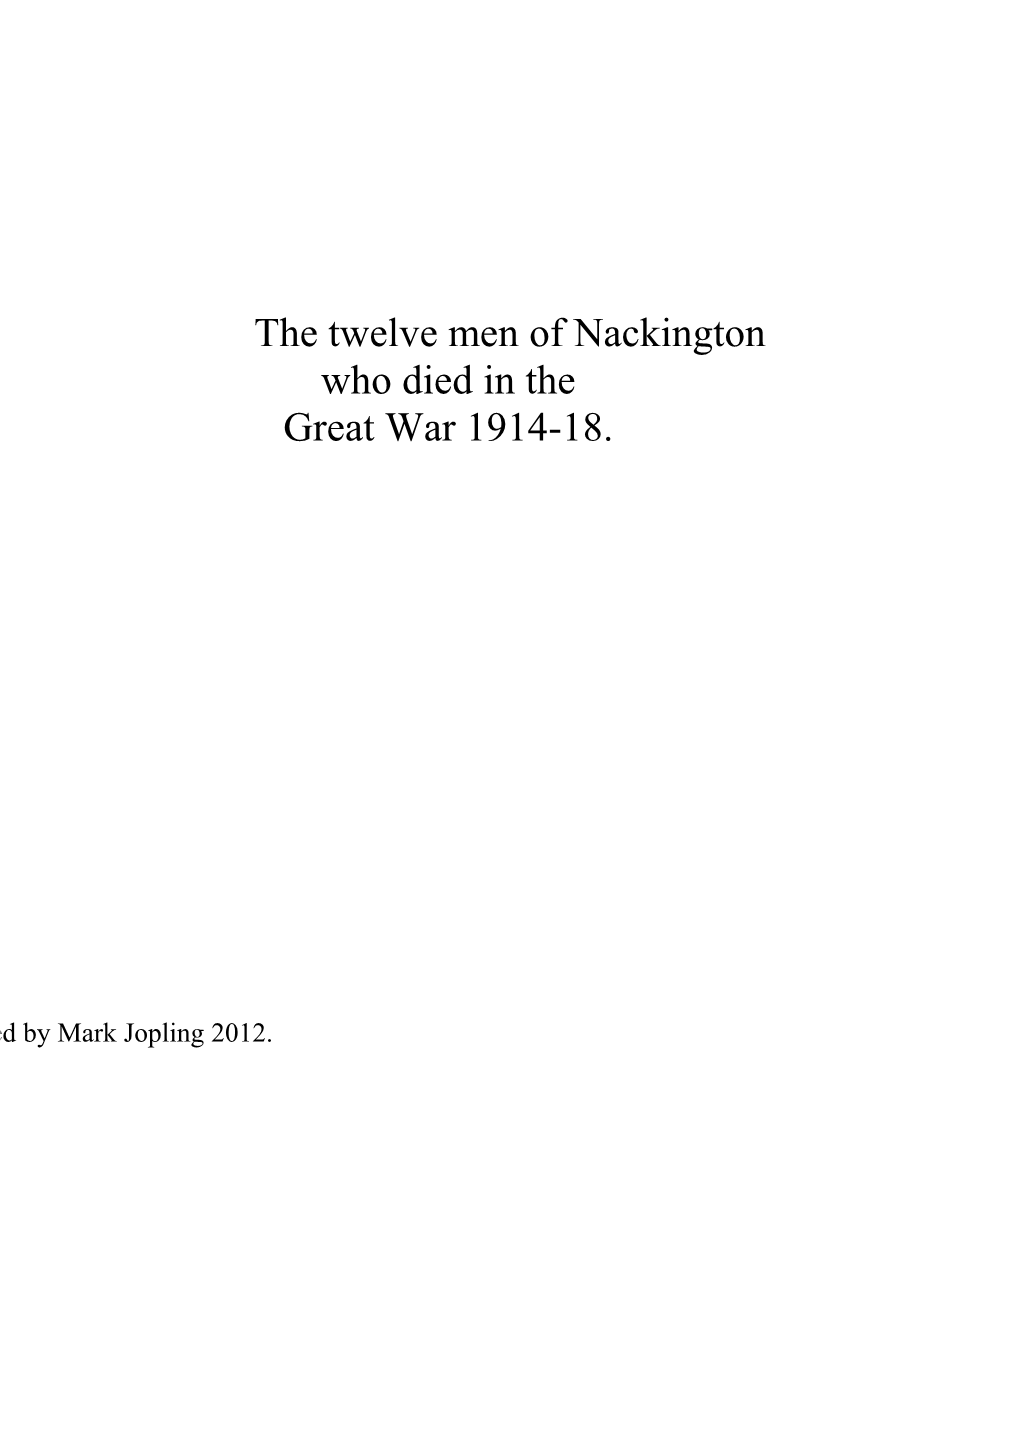 The Twelve Men of Nackington Who Died in the Great War 1914-18